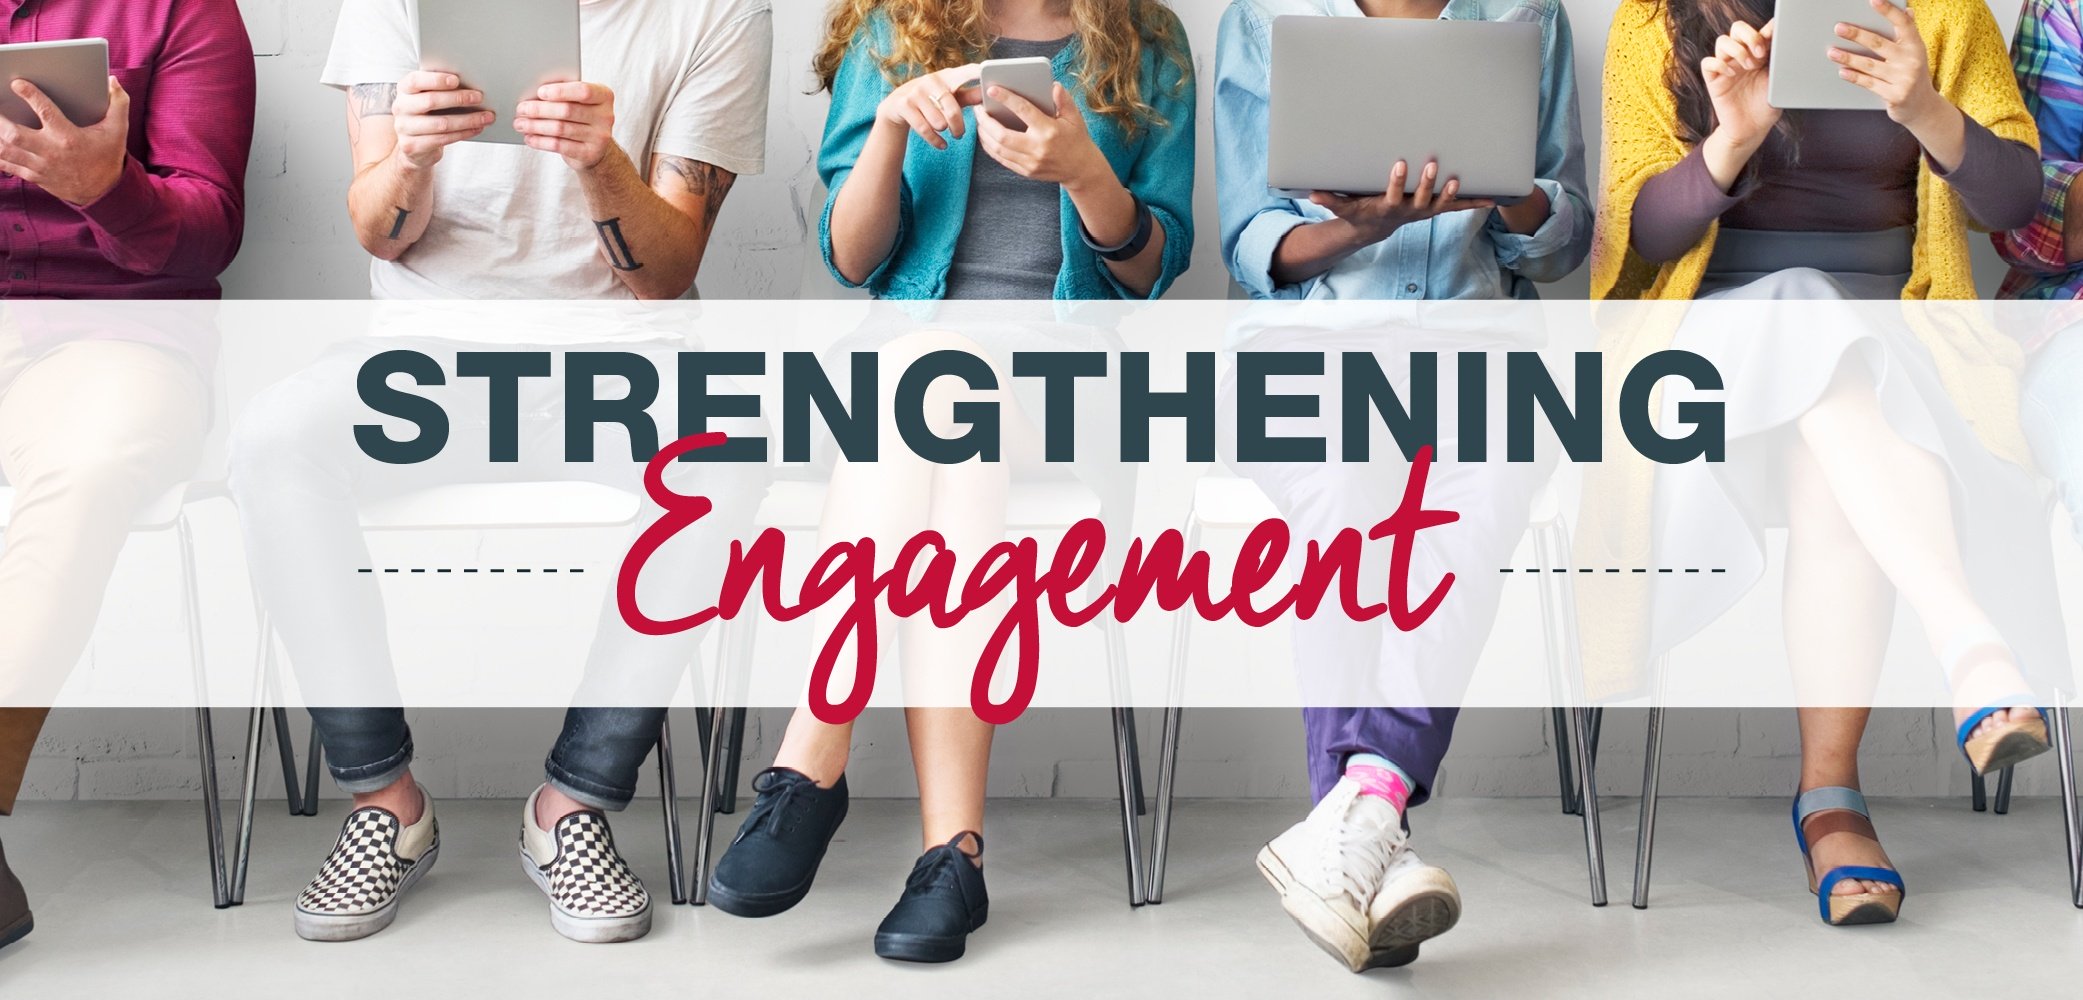 Member engagement ideas